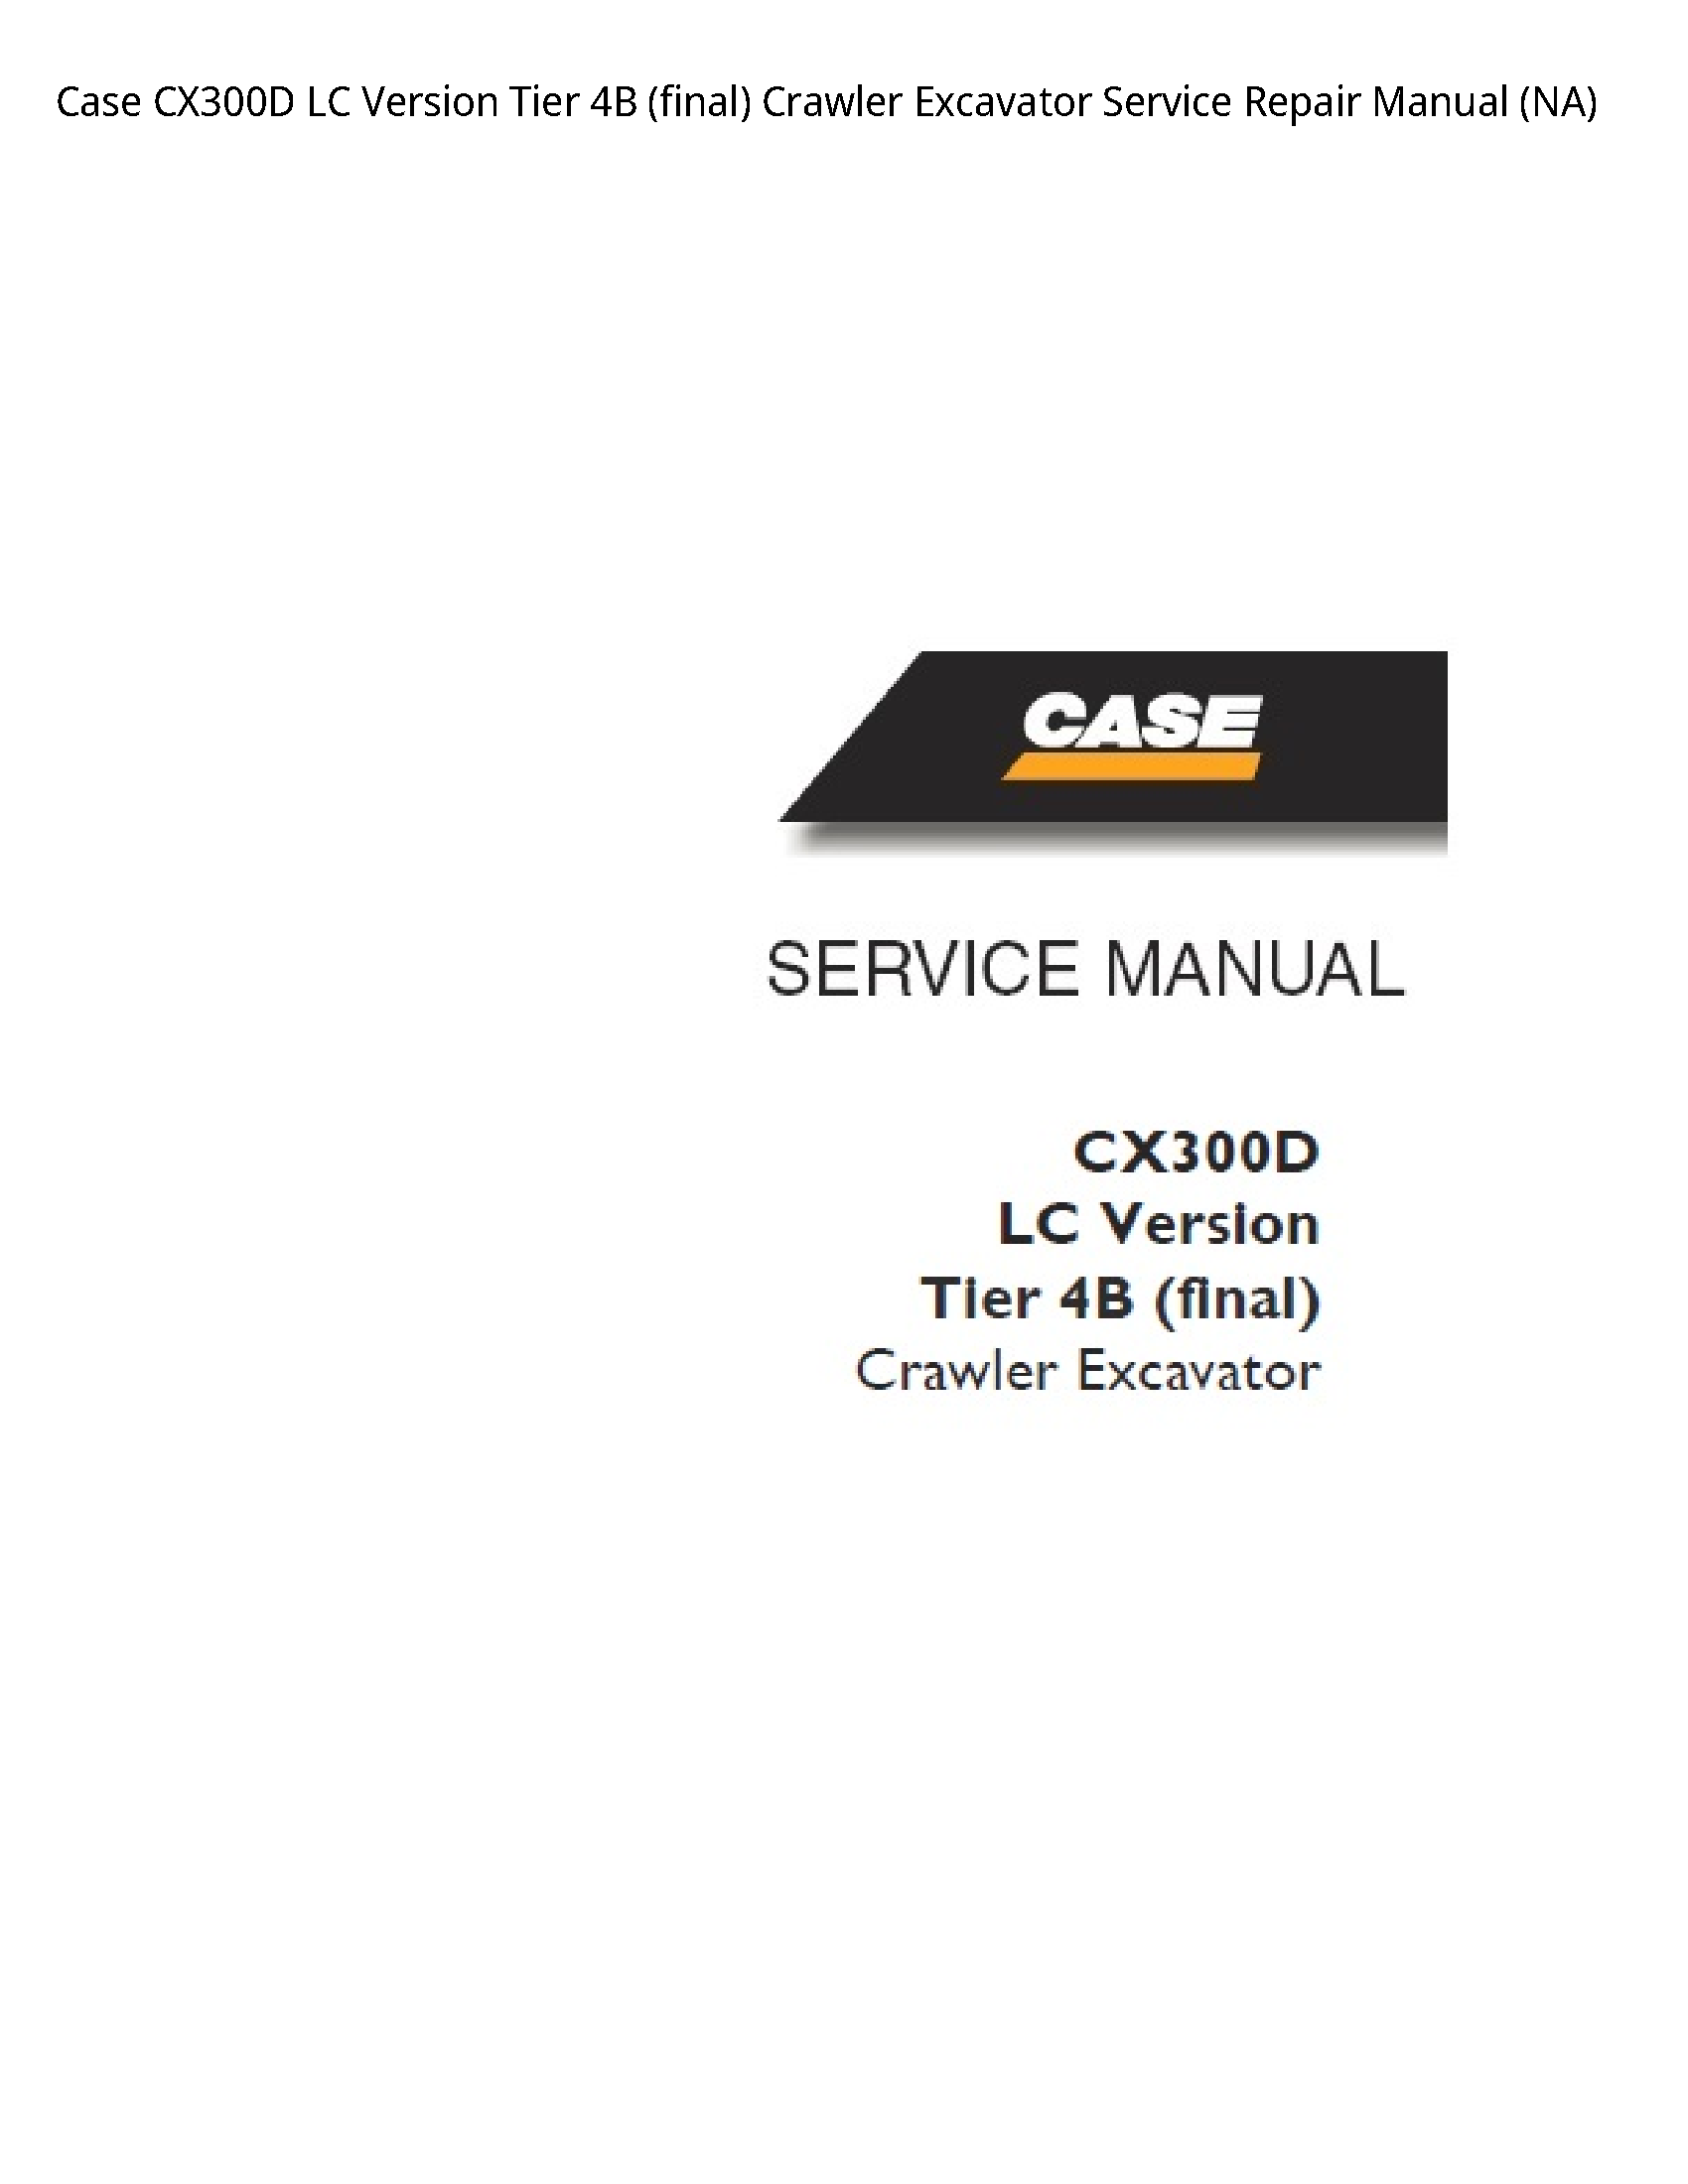 Case/Case IH CX300D LC Version Tier (final) Crawler Excavator manual